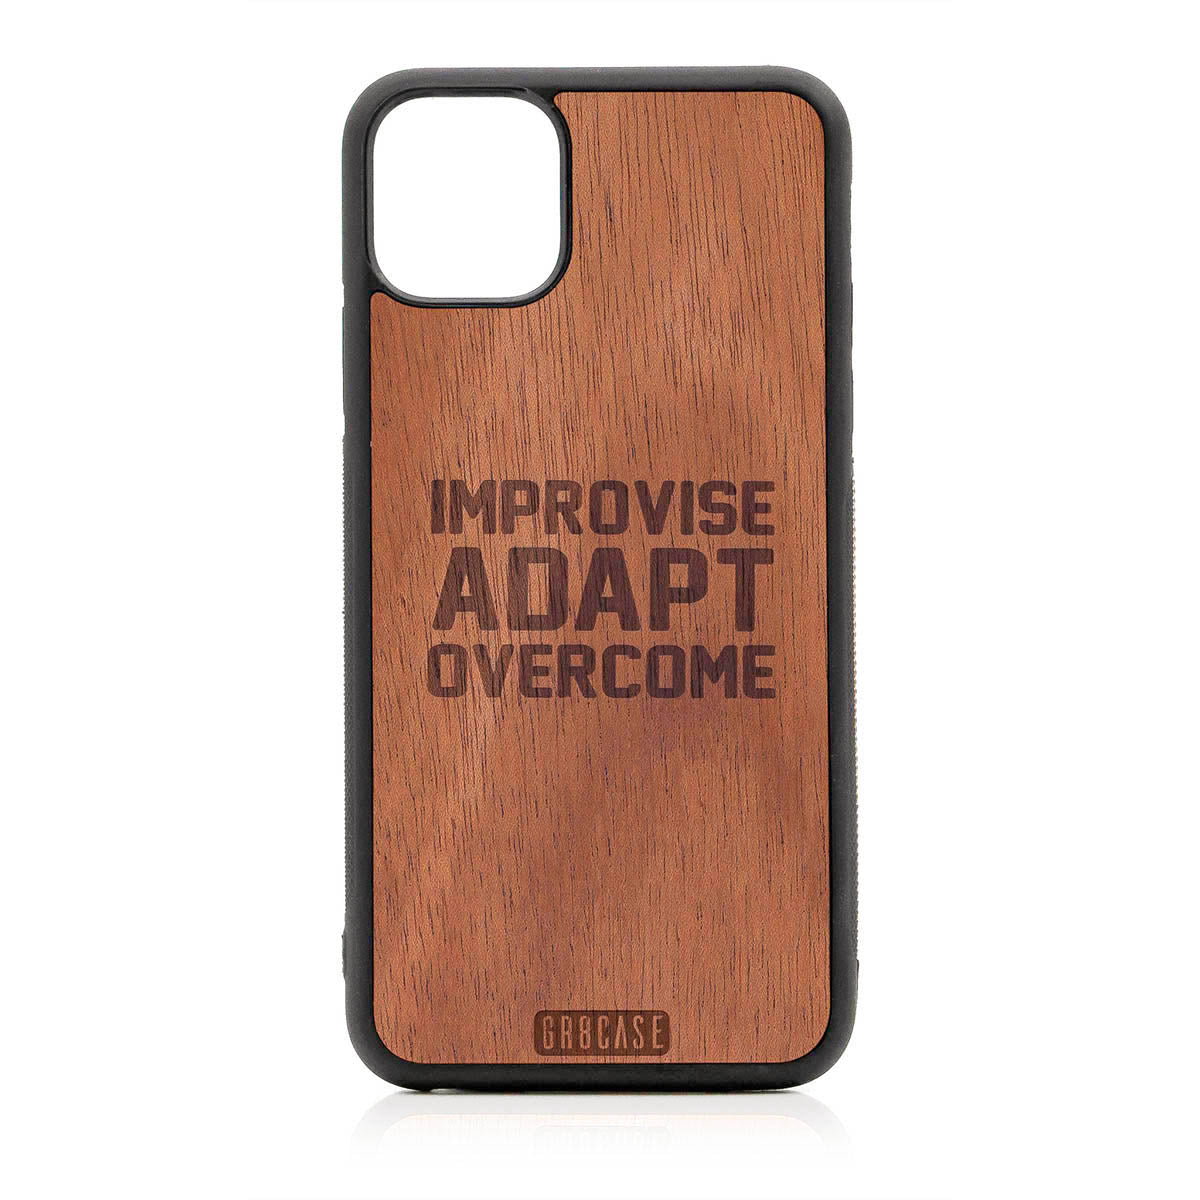 Improvise Adapt Overcome Design Wood Case For iPhone 11 Pro Max